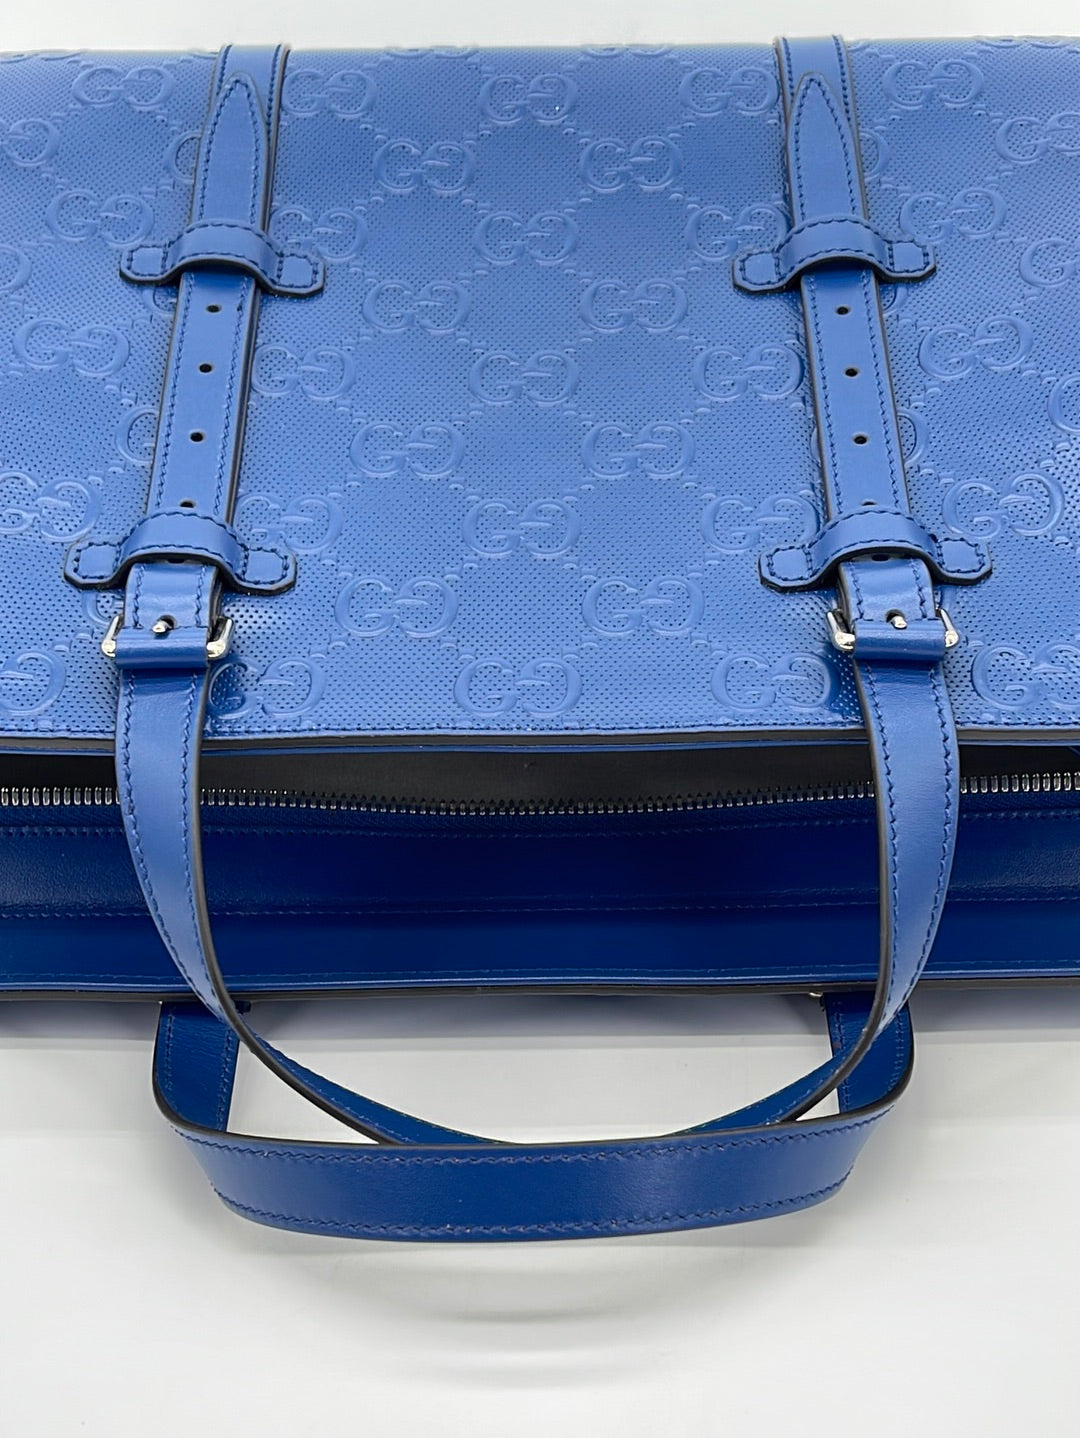 BlueHost.com  Gucci handbags outlet, Gucci purses, Cheap gucci bags